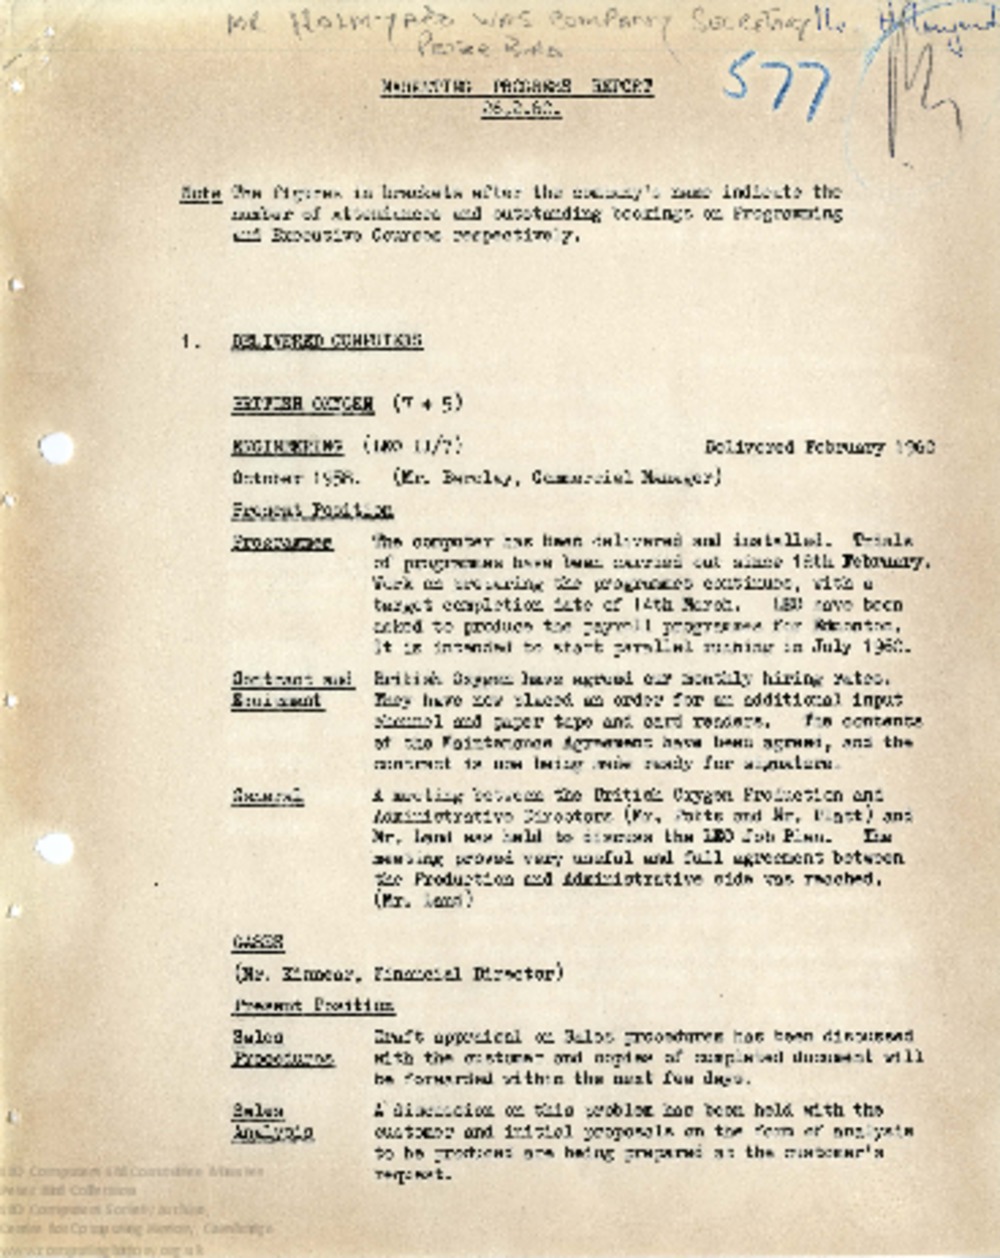 Article: 64486 Marketing Progress Report, 26th Feb 1960